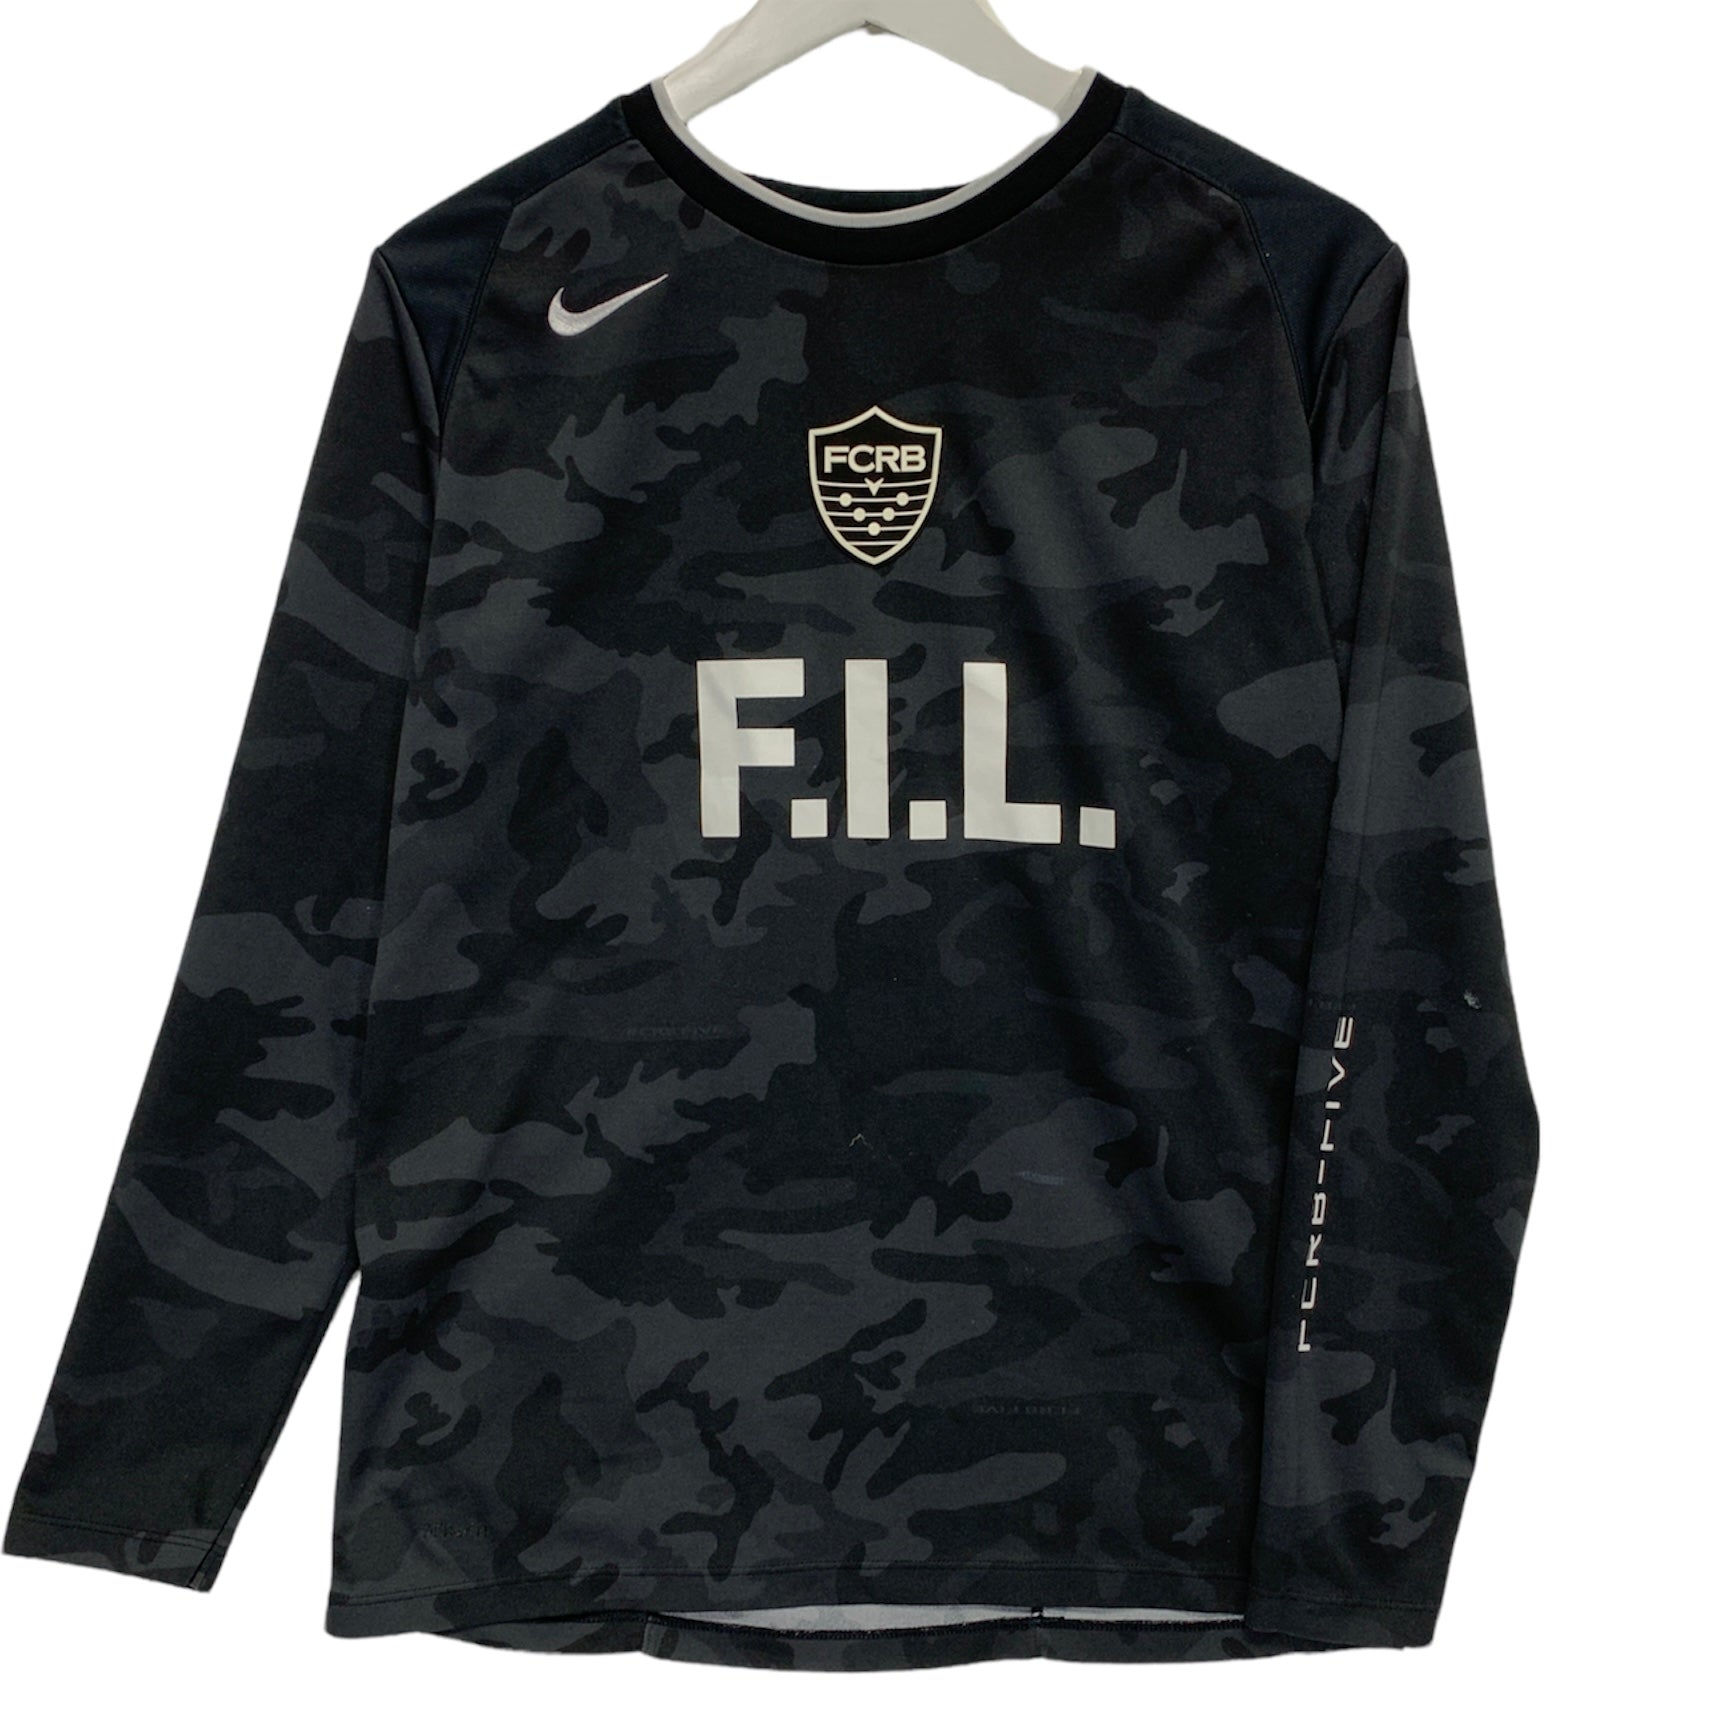 S] Fragment Visvim FCRB Nike Soccer Football L/S Jersey Shirt Camo 